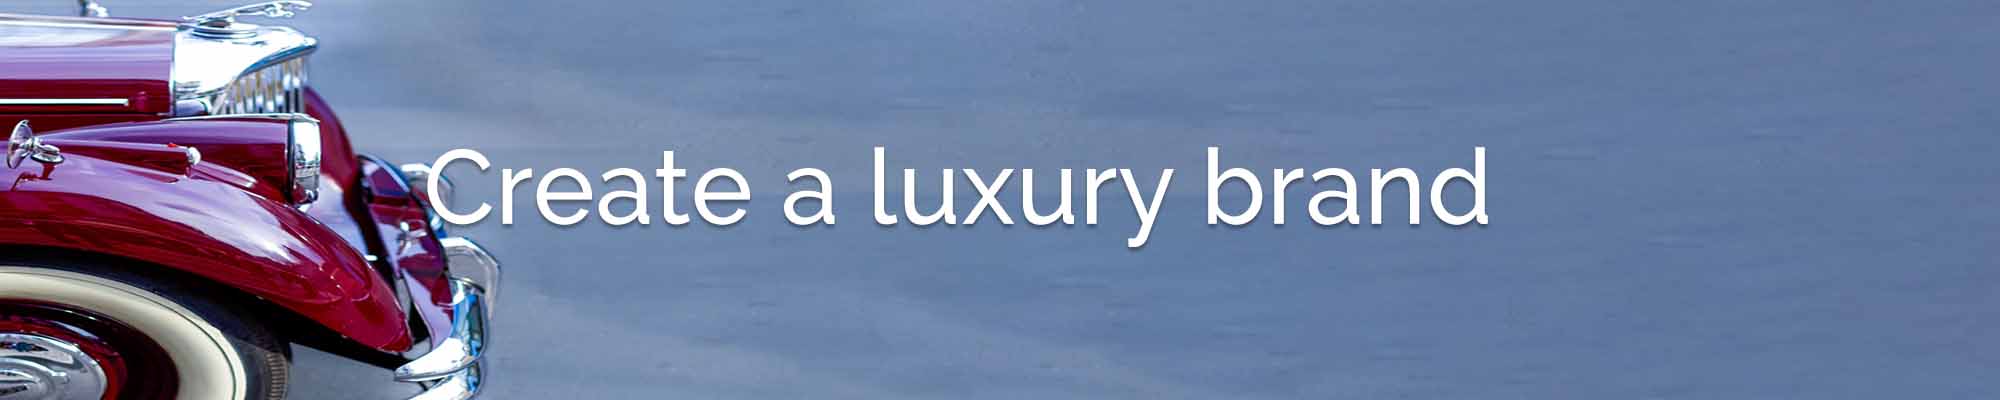 luxury brand creation